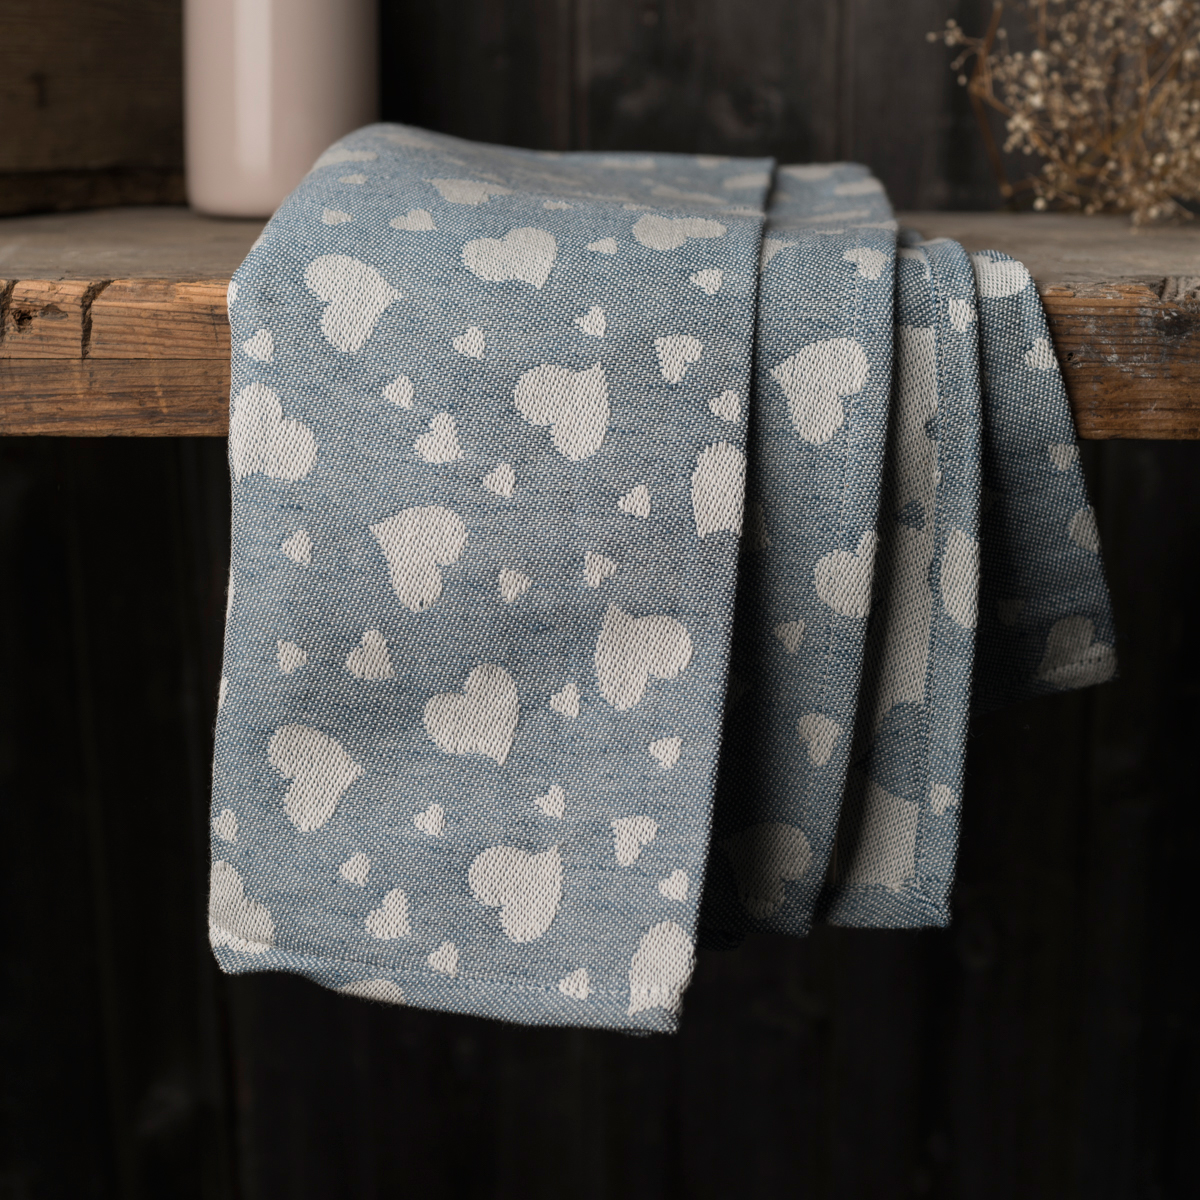 Hand-Stitched Artisanal Black Tea Towels - Heart - AllORA